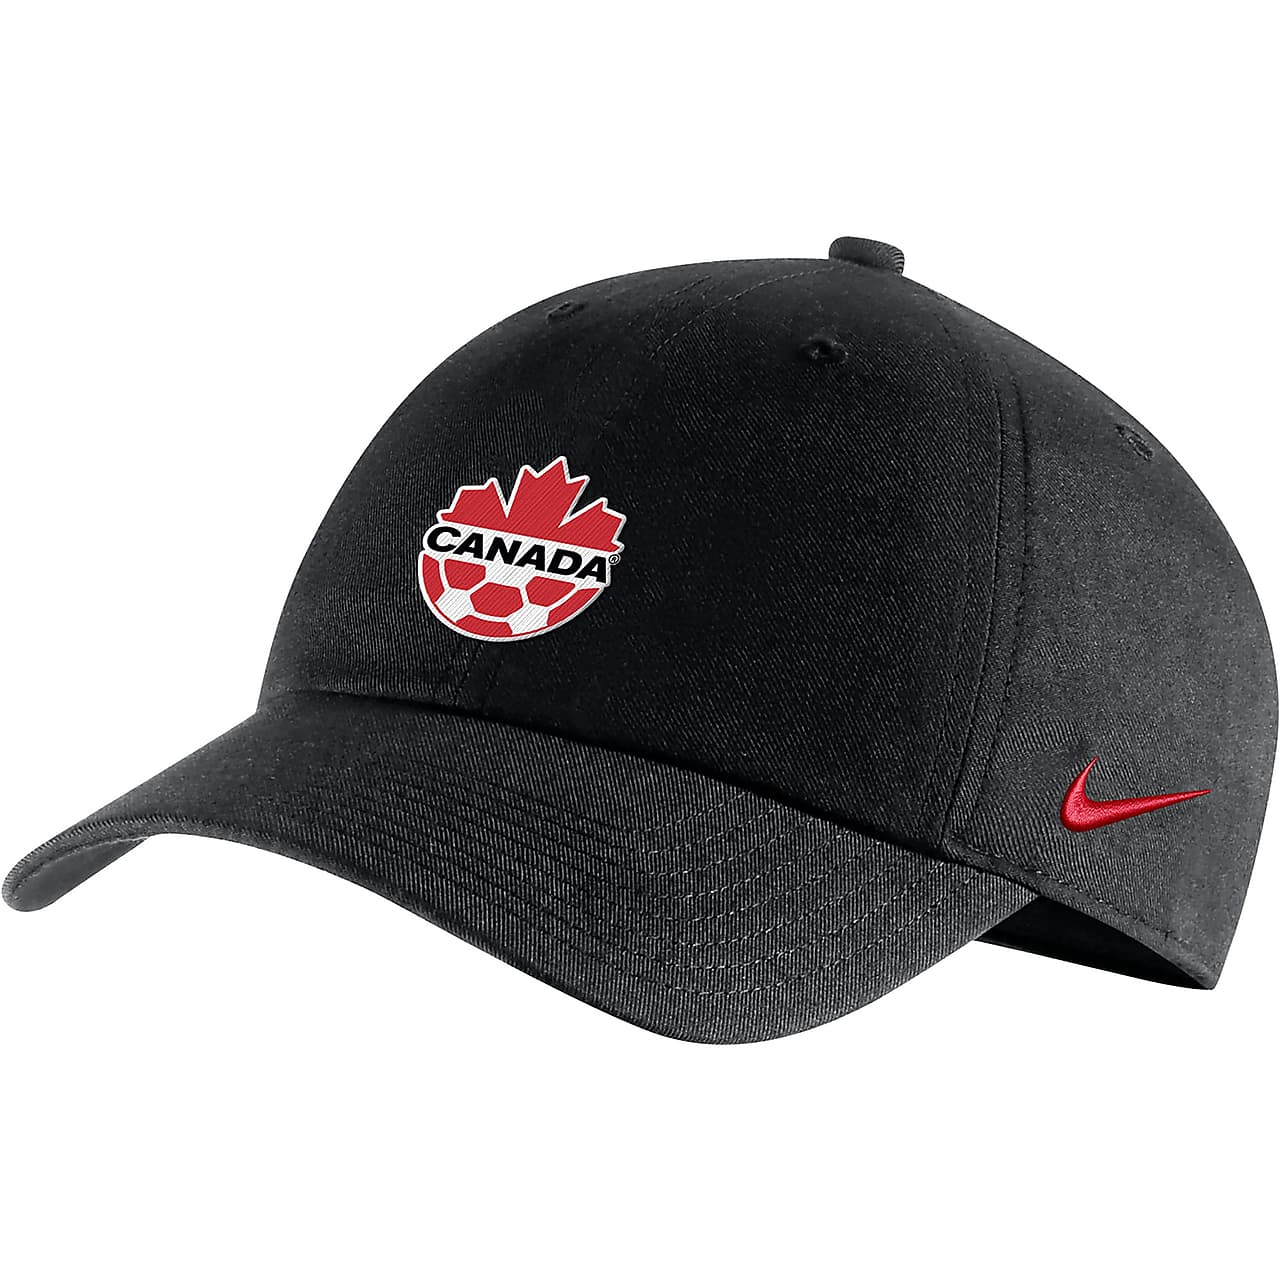 Canada Heritage86 Men's Hat.